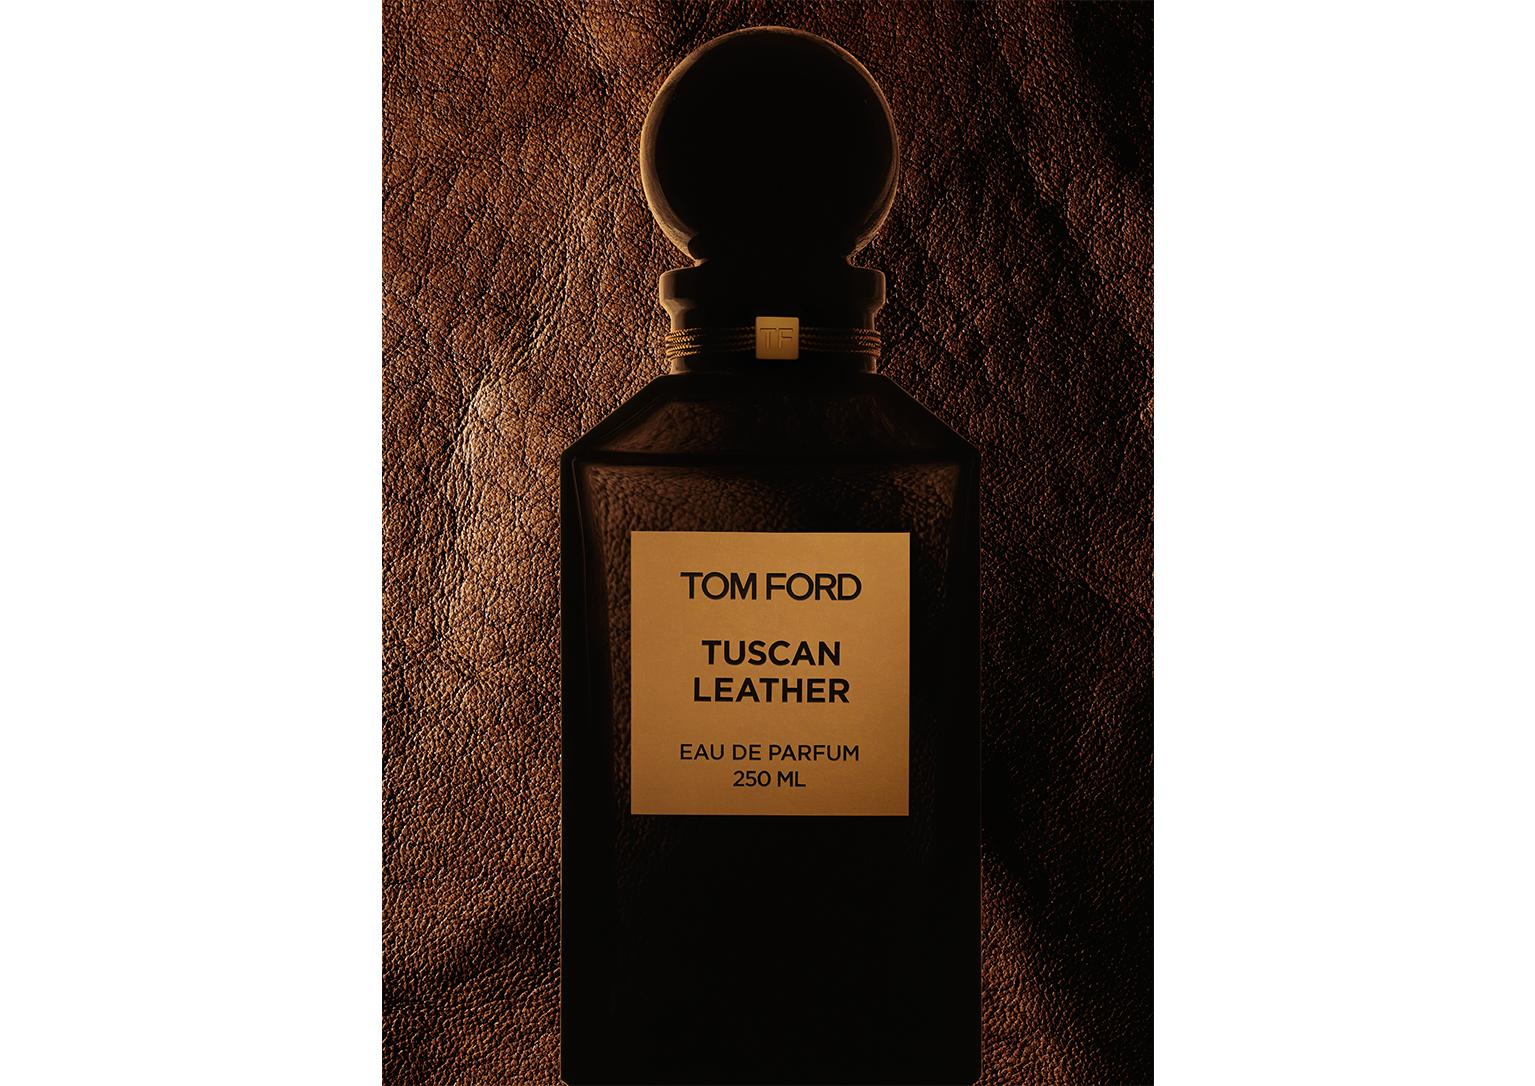 Tom Ford TUSCAN LEATHER EAU DE PARFUM | TomFord.com